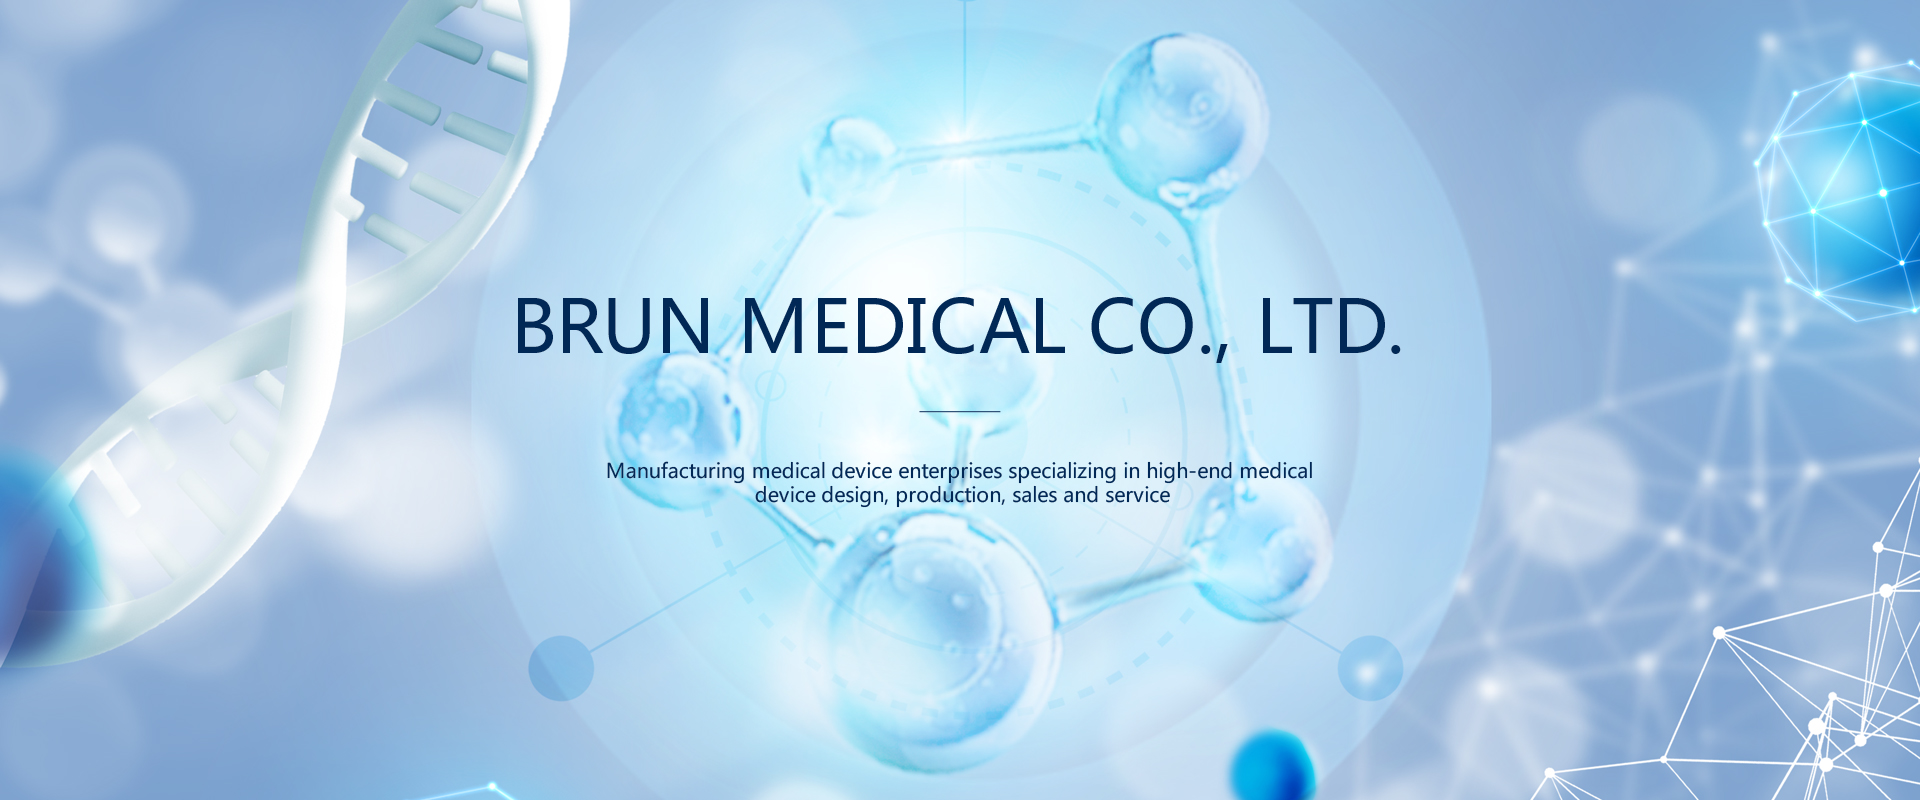 Brun Medical Co., Ltd.